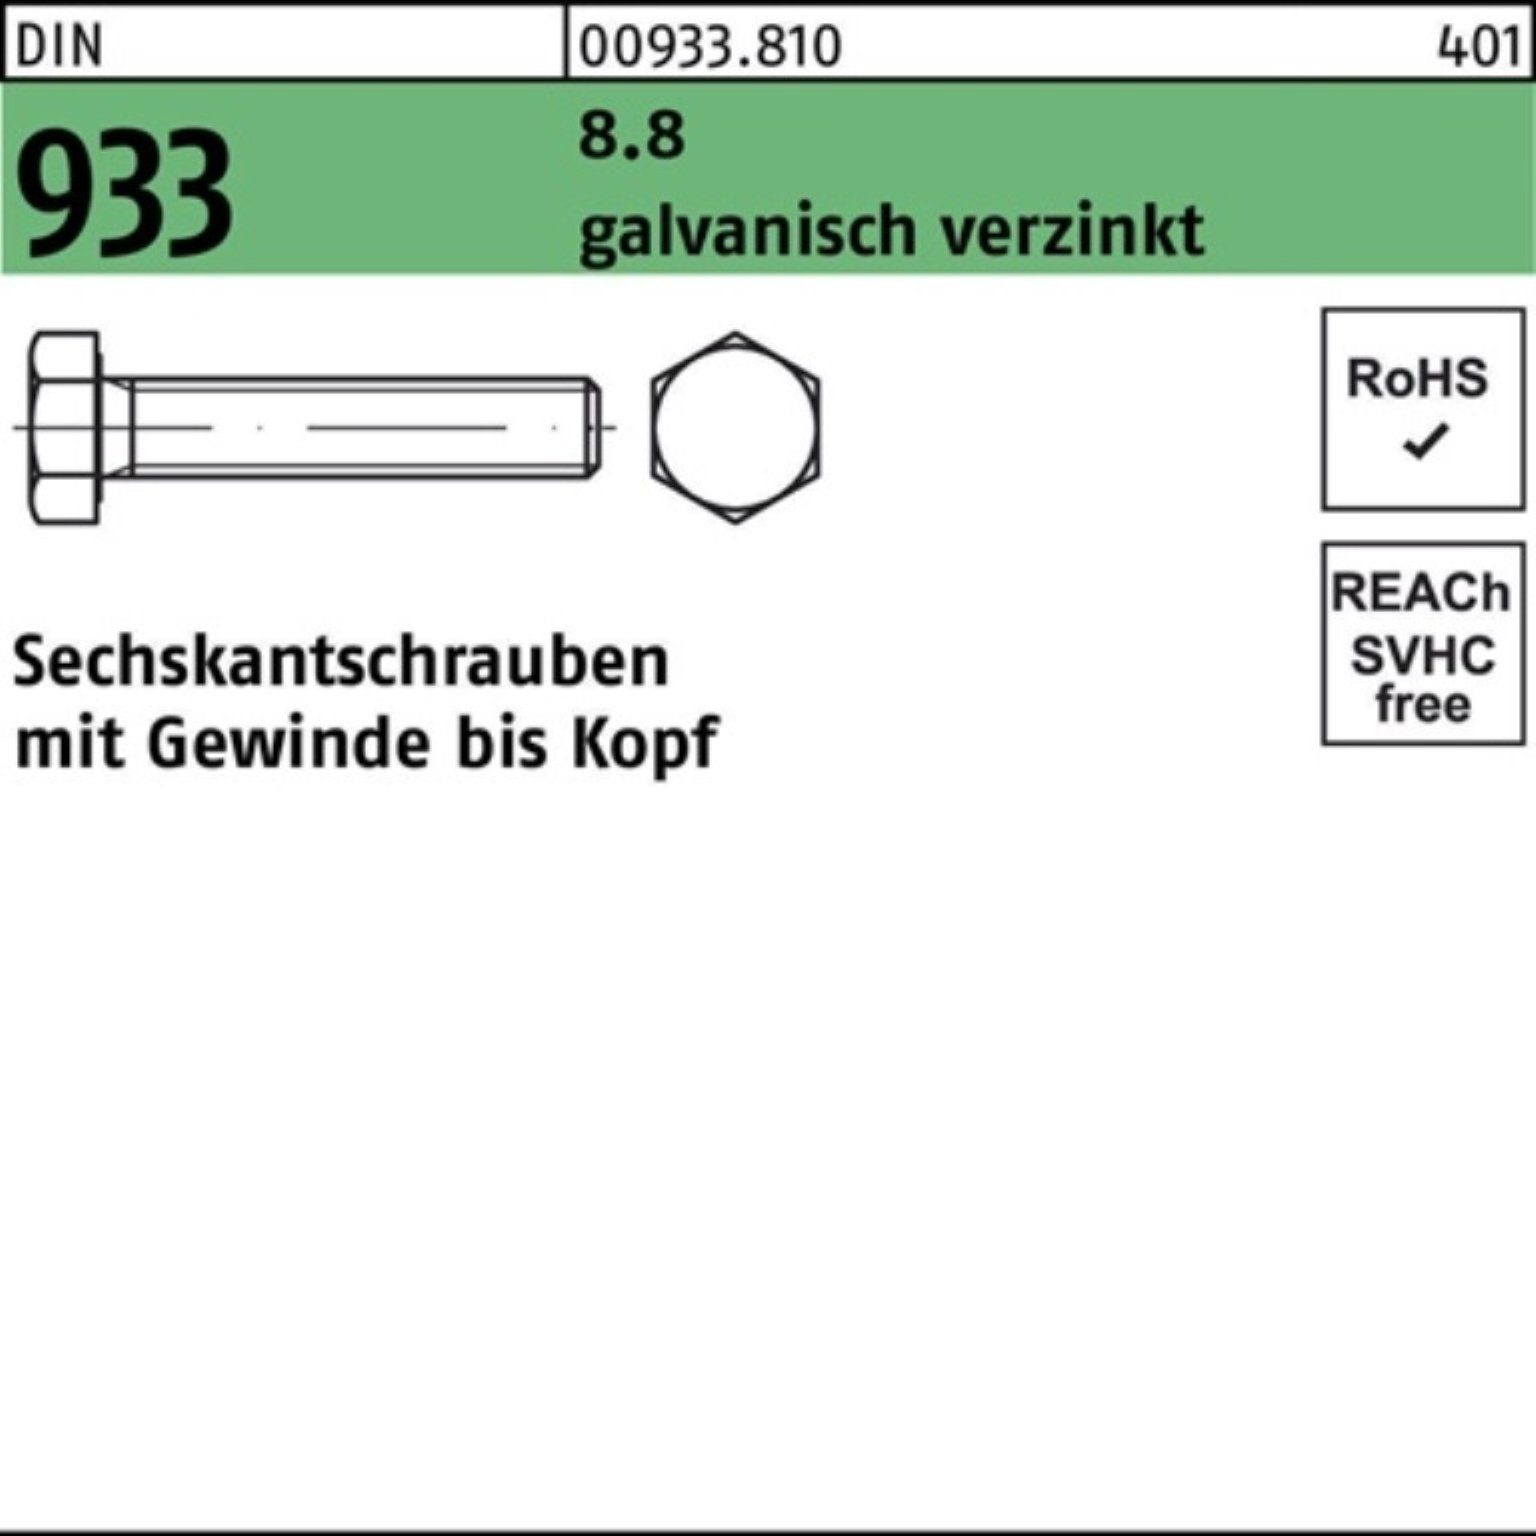 Reyher Sechskantschraube 100er Pack Sechskantschraube 933 galv.verz. Stü 1 DIN M16x VG 8.8 320